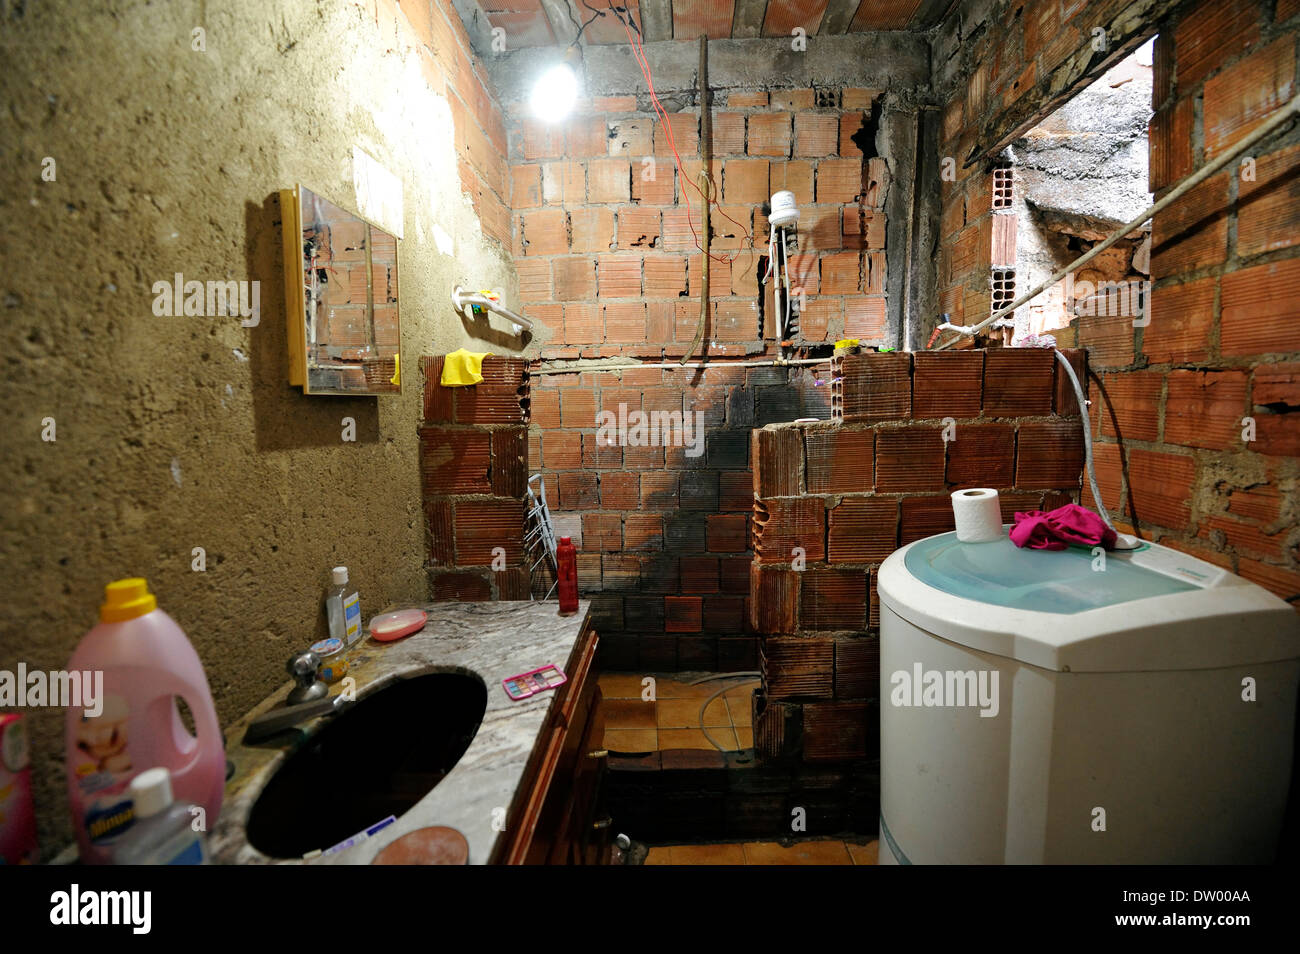 Interior view of a home, bathroom, in the slums, Favela Cerro Corá, Rio de Janeiro, Brazil Stock Photo